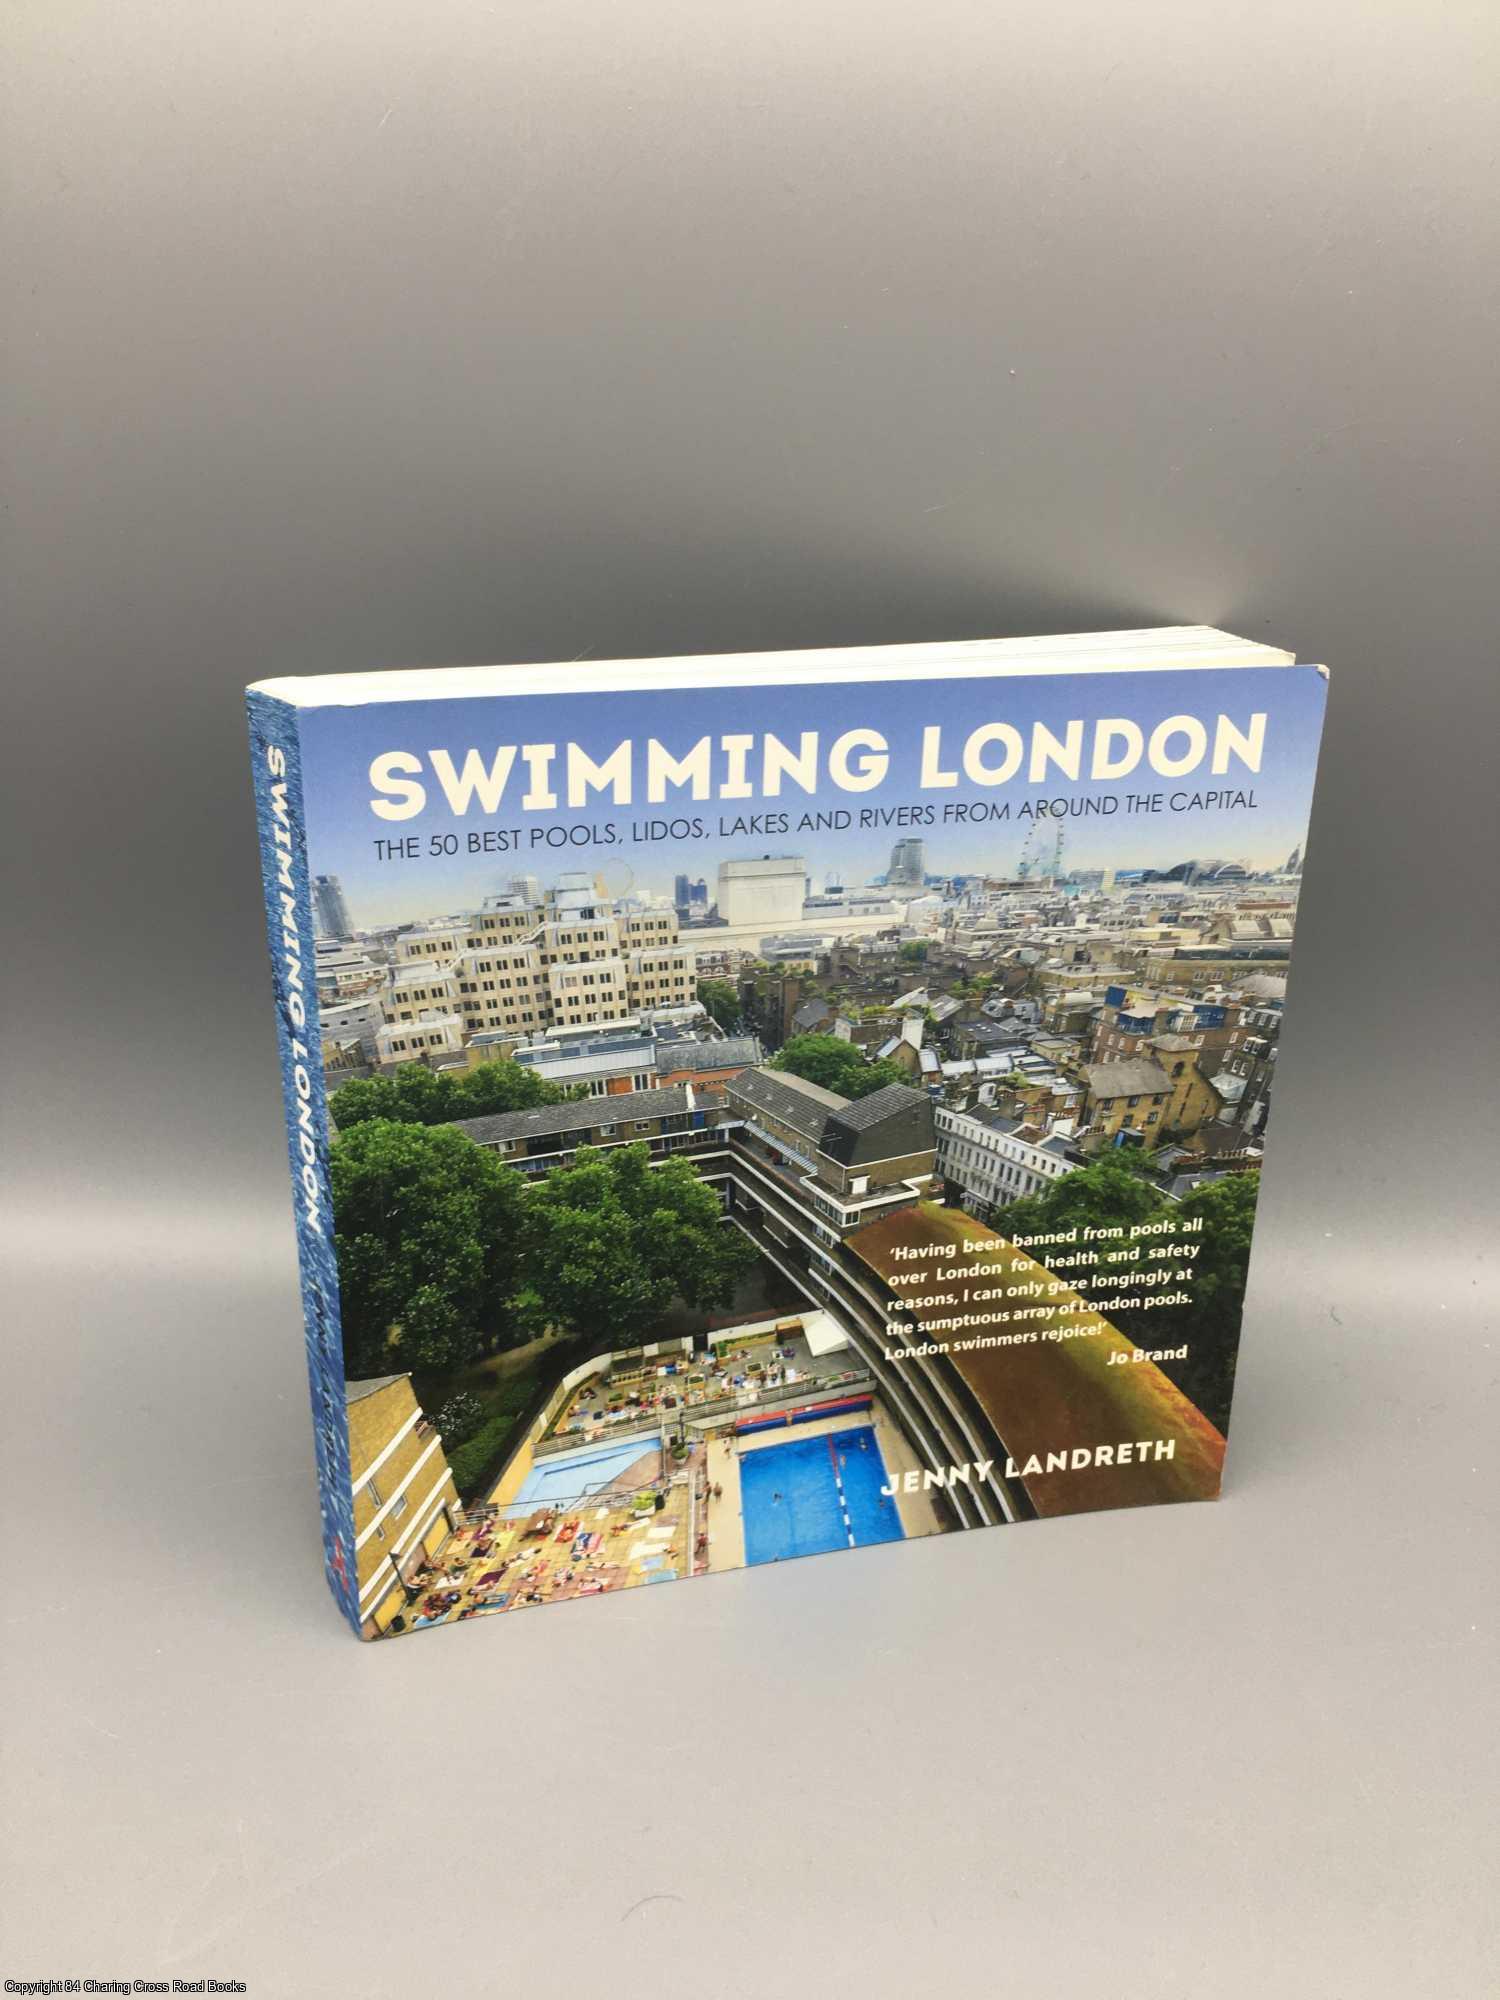 Landreth, Jenny - Swimming London: London's 50 greatest swimming spots